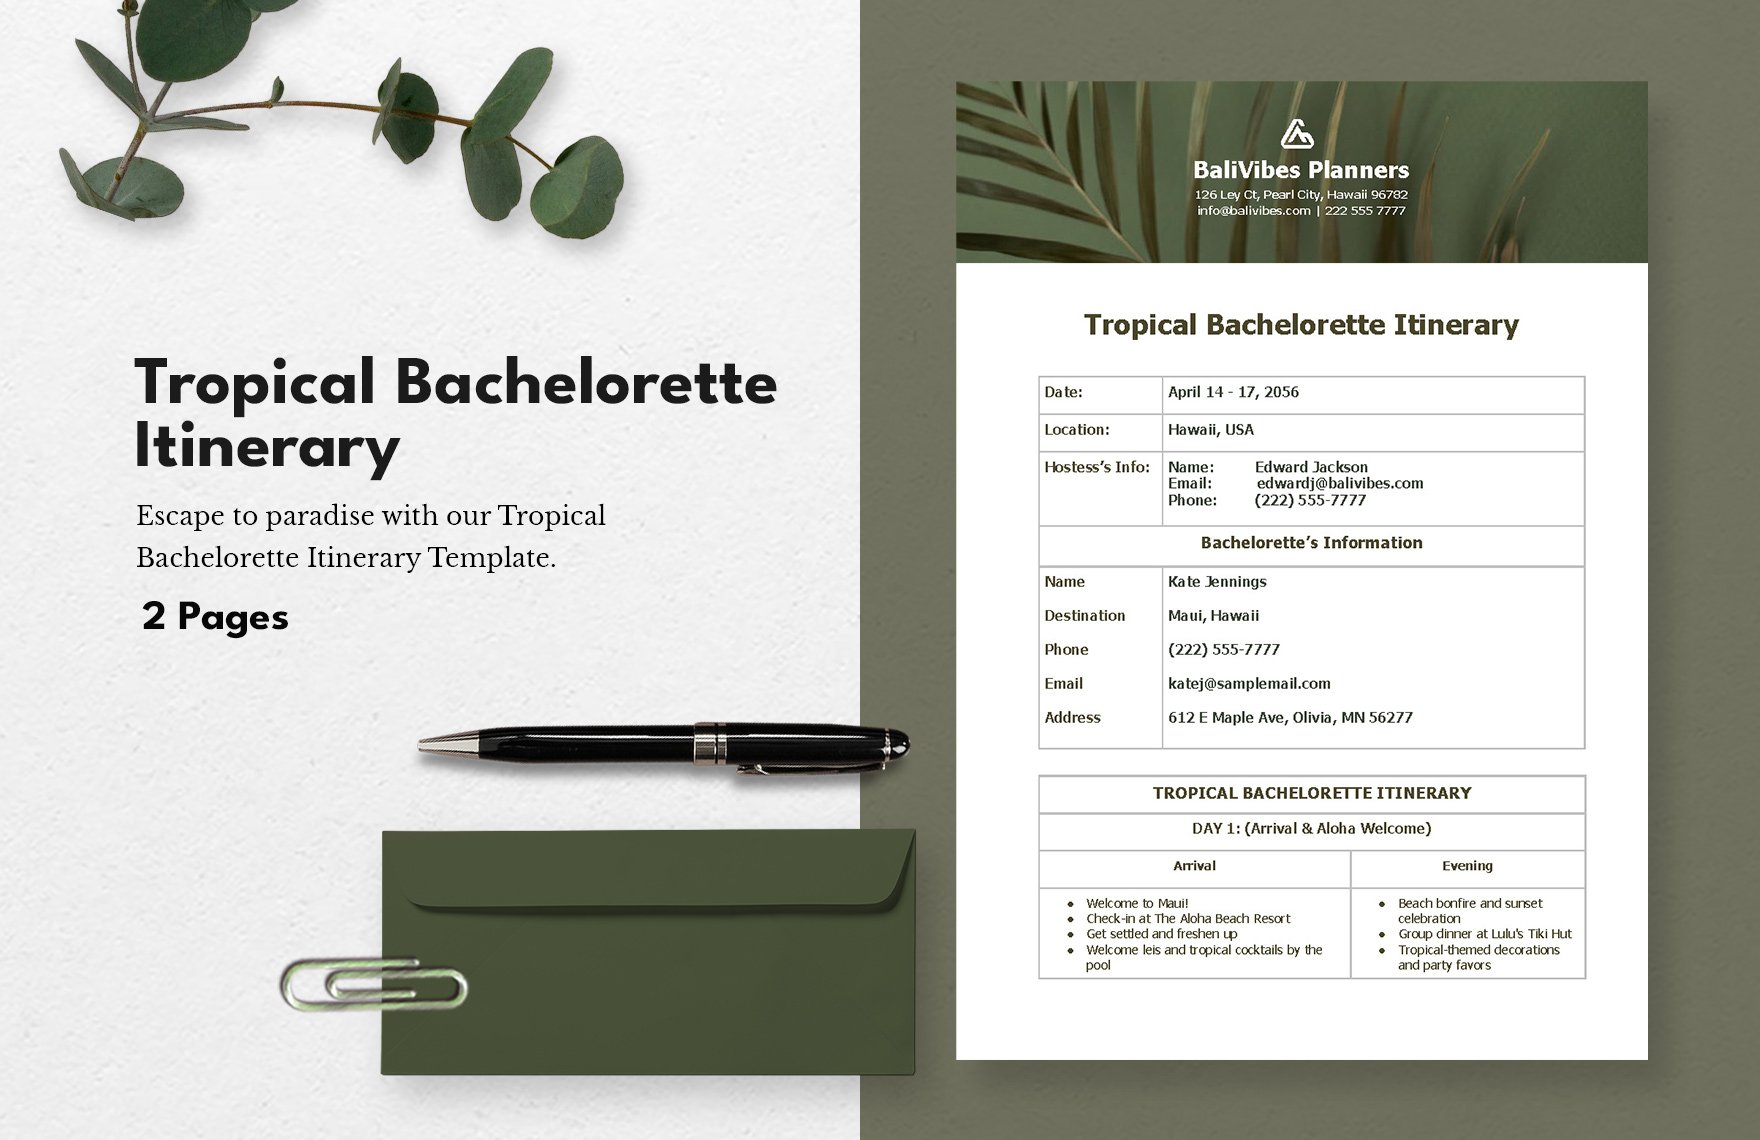 Tropical Bachelorette Itinerary 